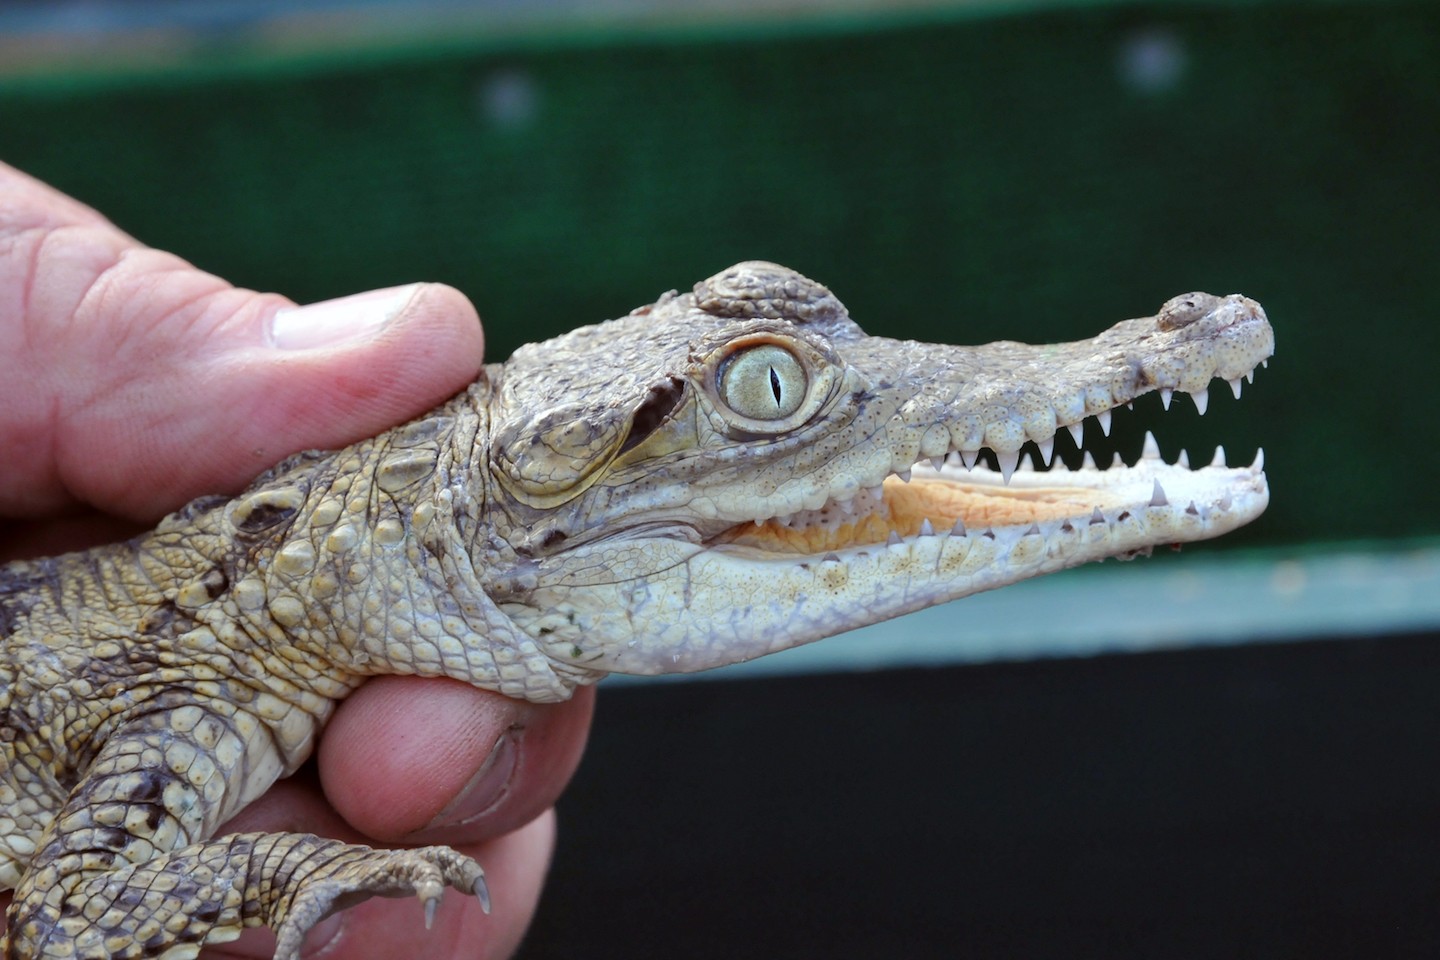 Hermès to Build New Farm and Kill Over 50,000 Crocodiles to Supply